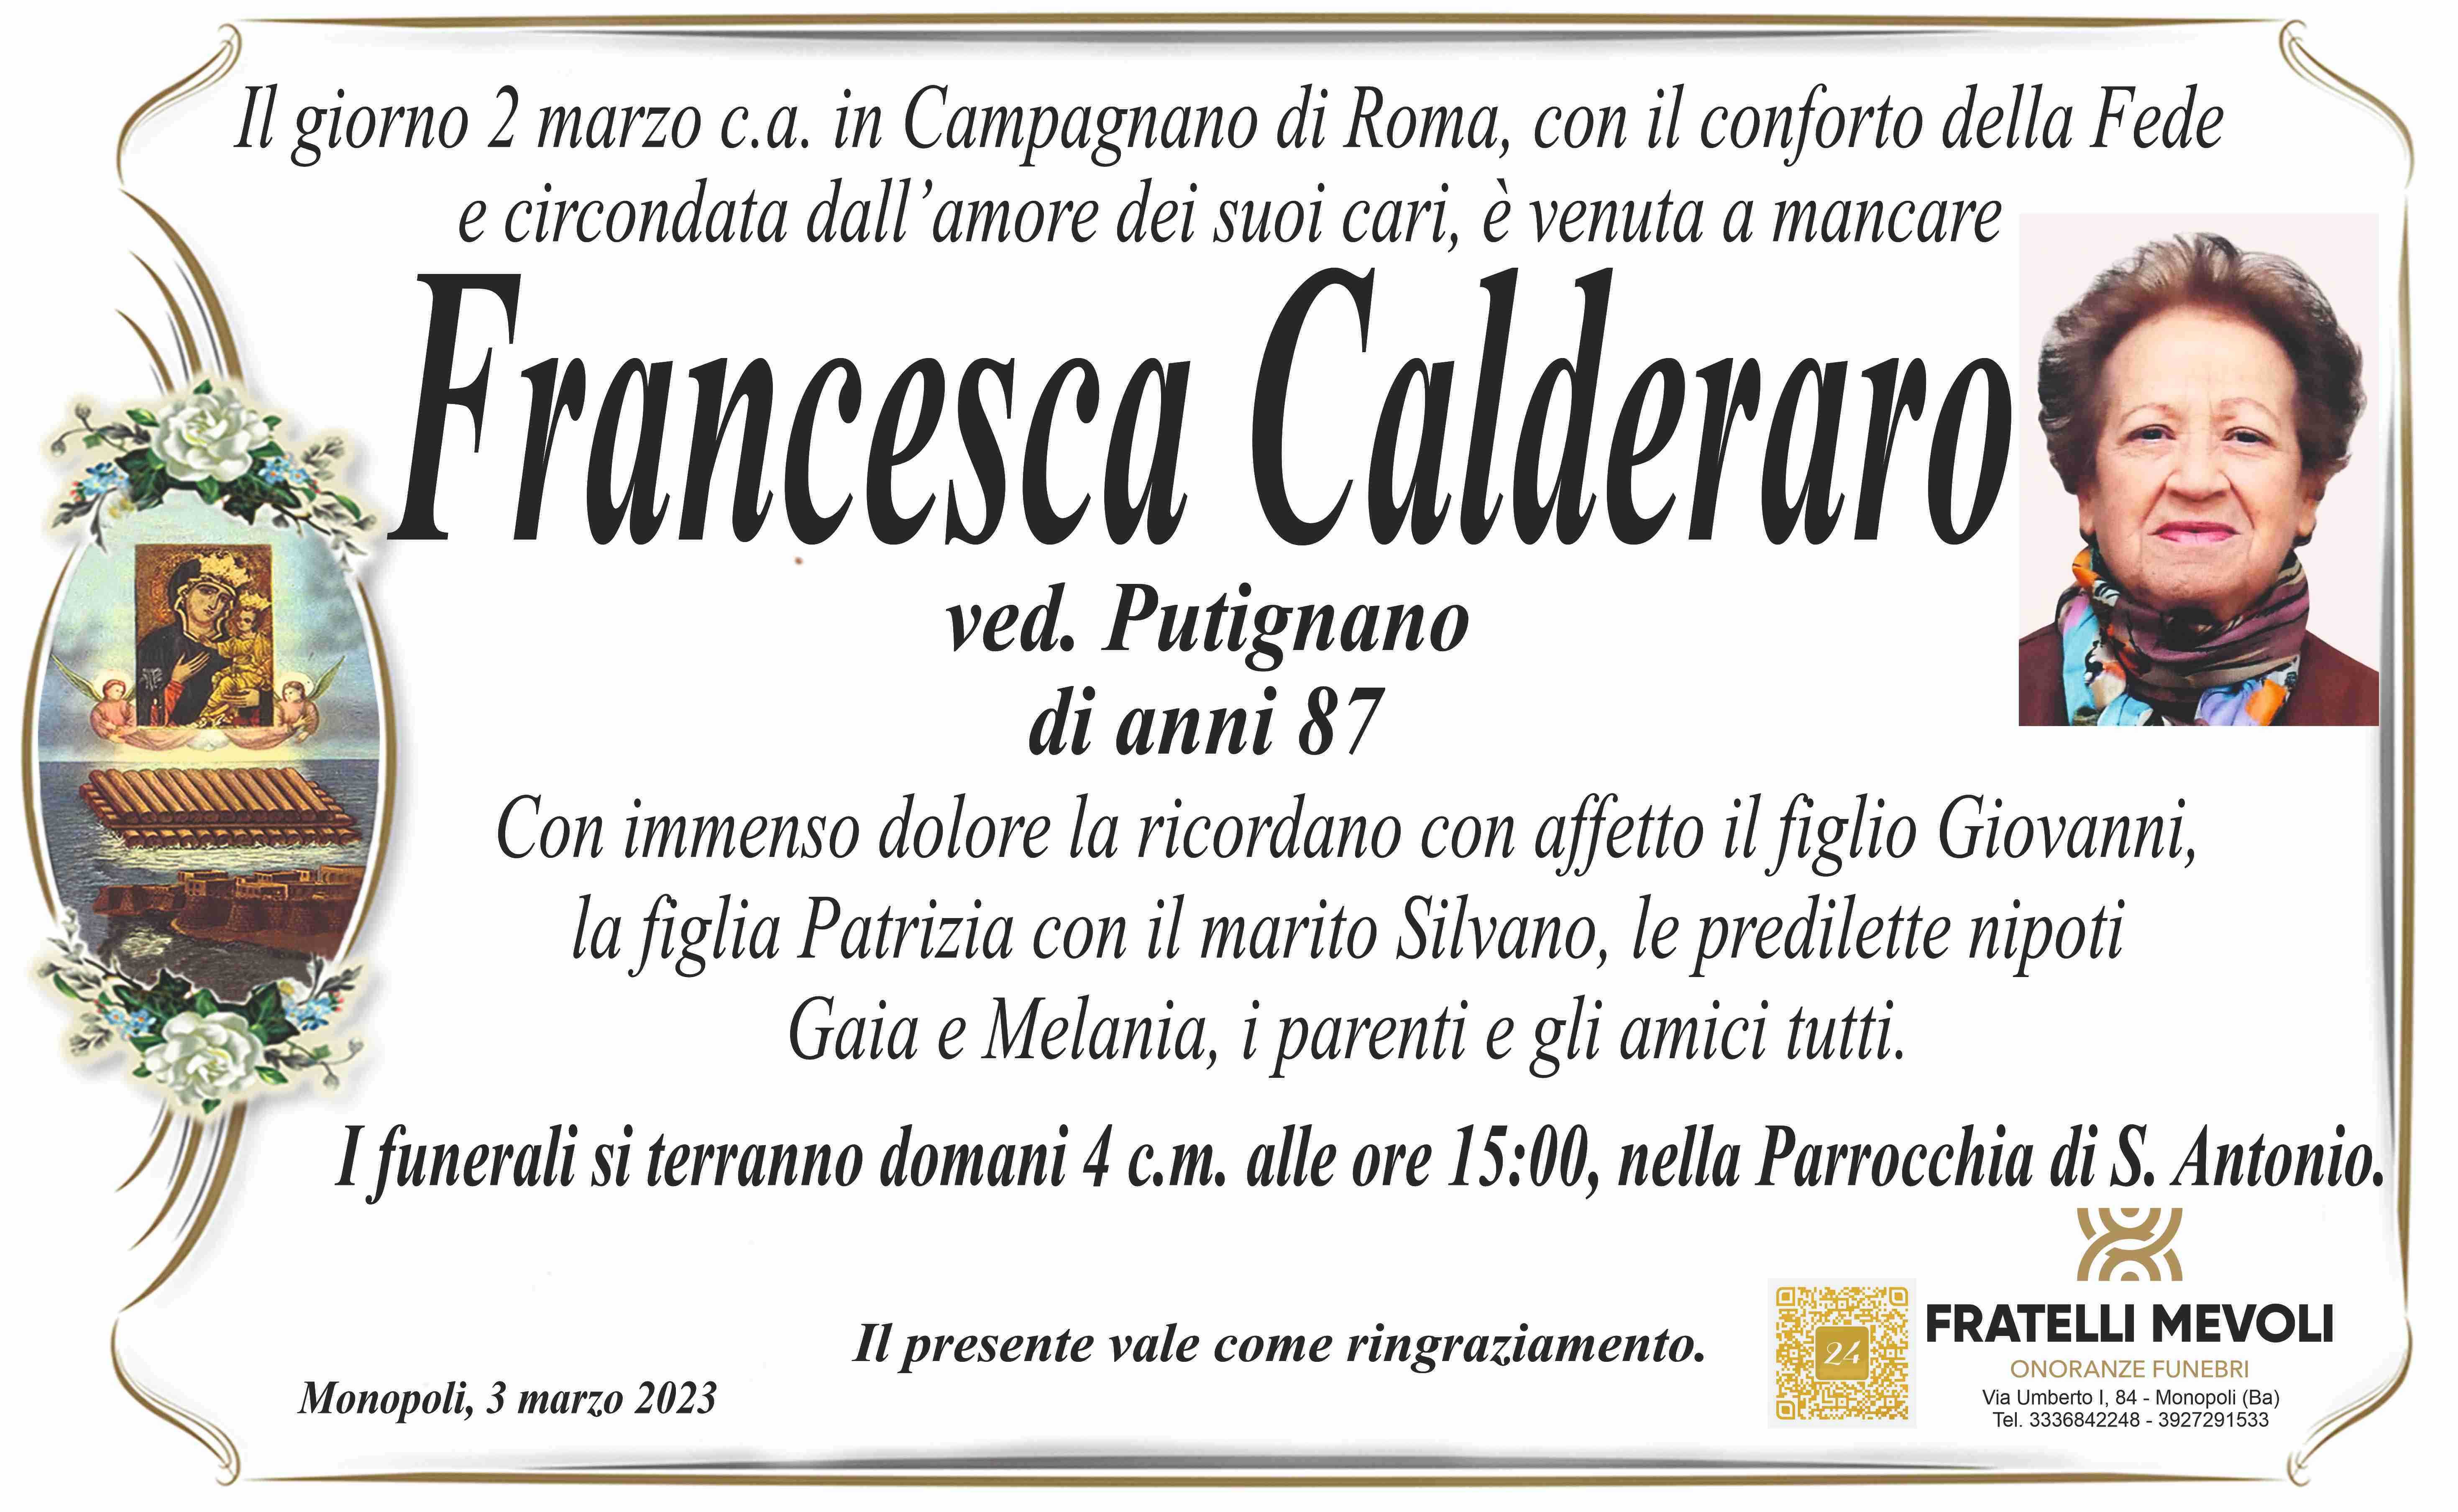 Francesca Calderaro